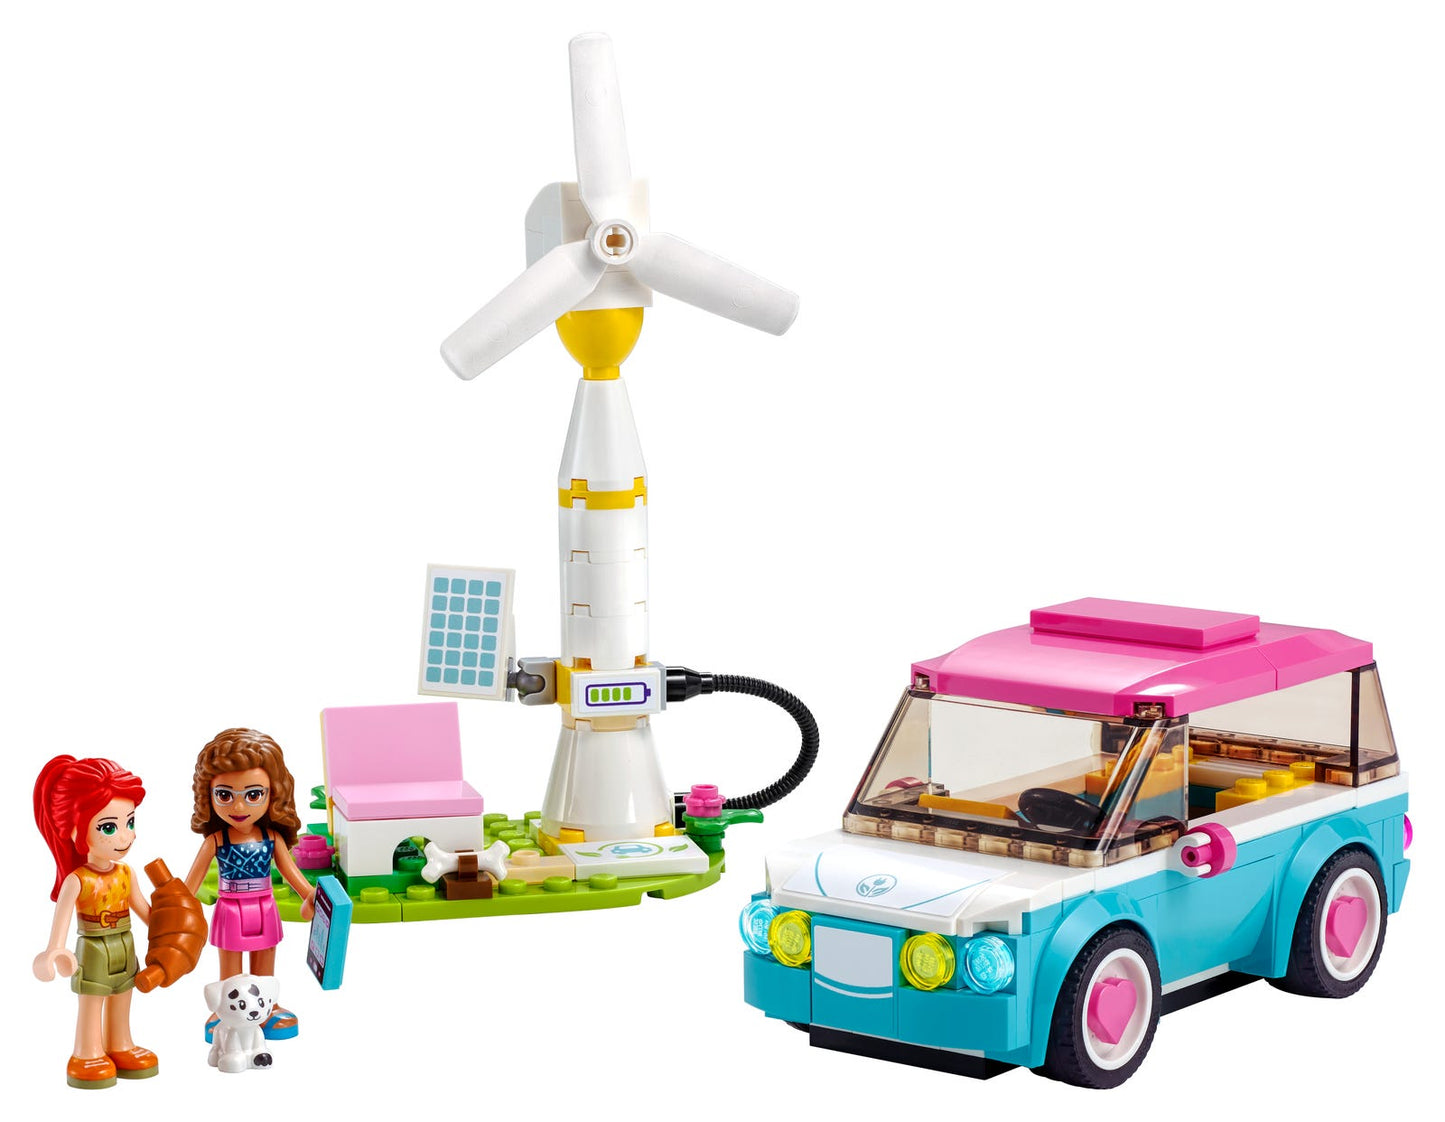 LEGO Friends Olivia's Electric Car 41443